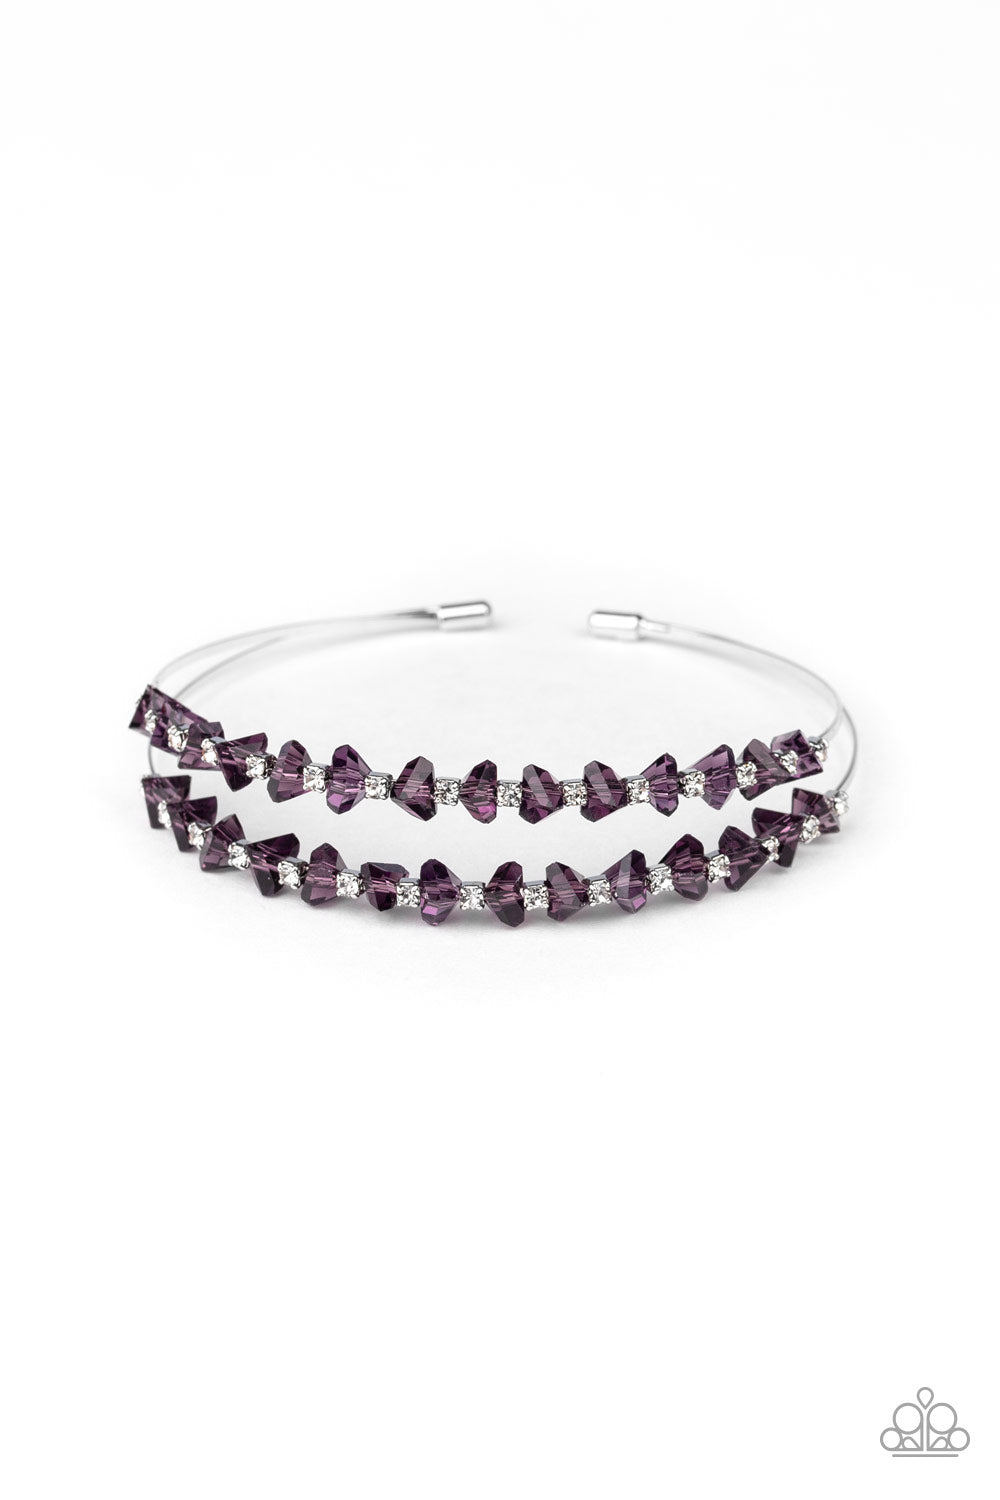 Prismatic Posh Purple Cuff Bracelet - Paparazzi Accessories